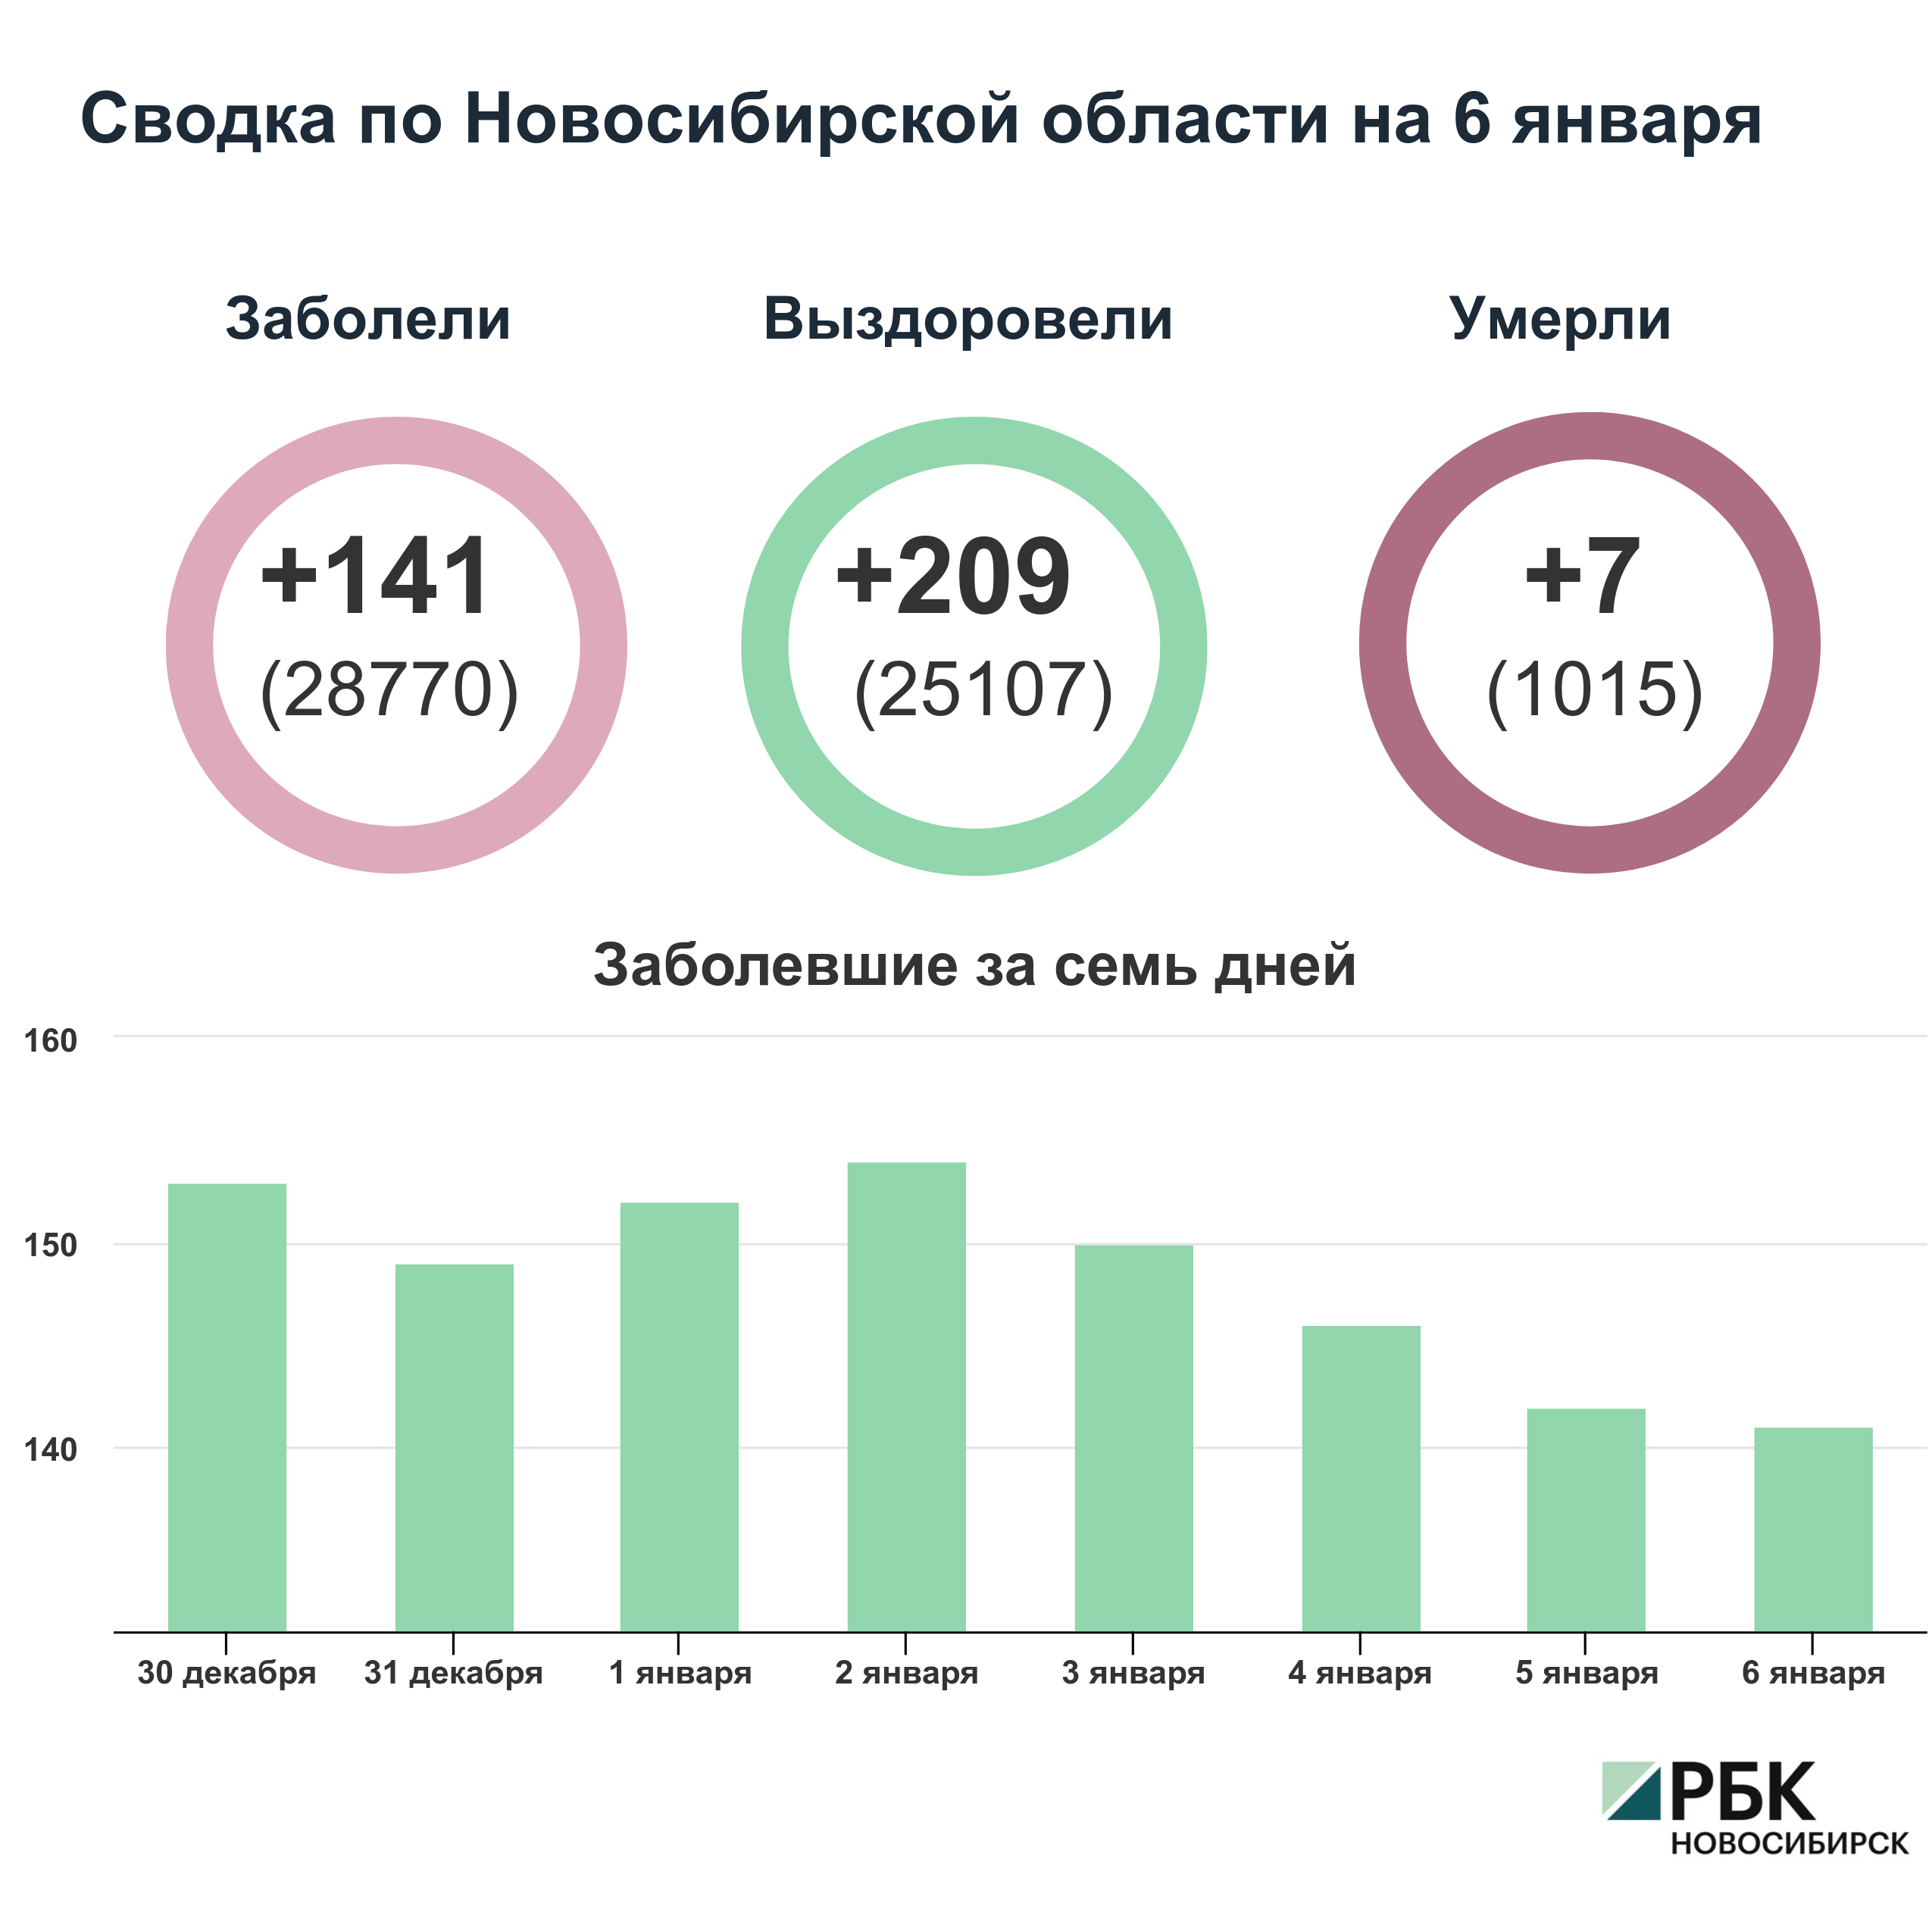 Коронавирус в Новосибирске: сводка на 6 января